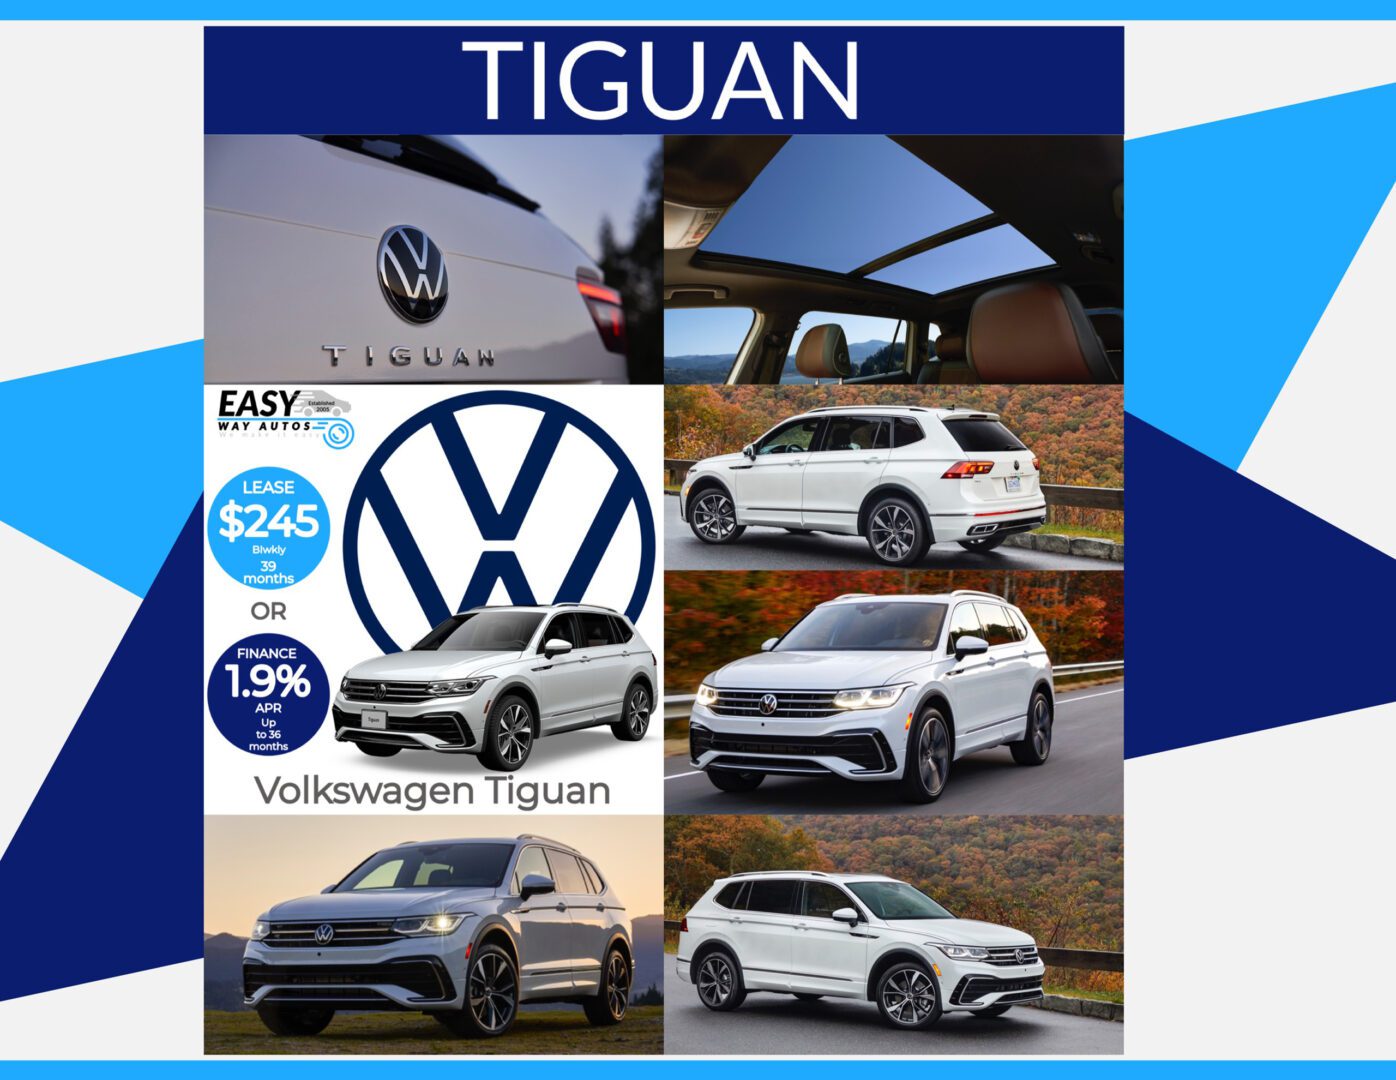 Volkswagen tiguan for sale in philadelphia, pennsylvania.